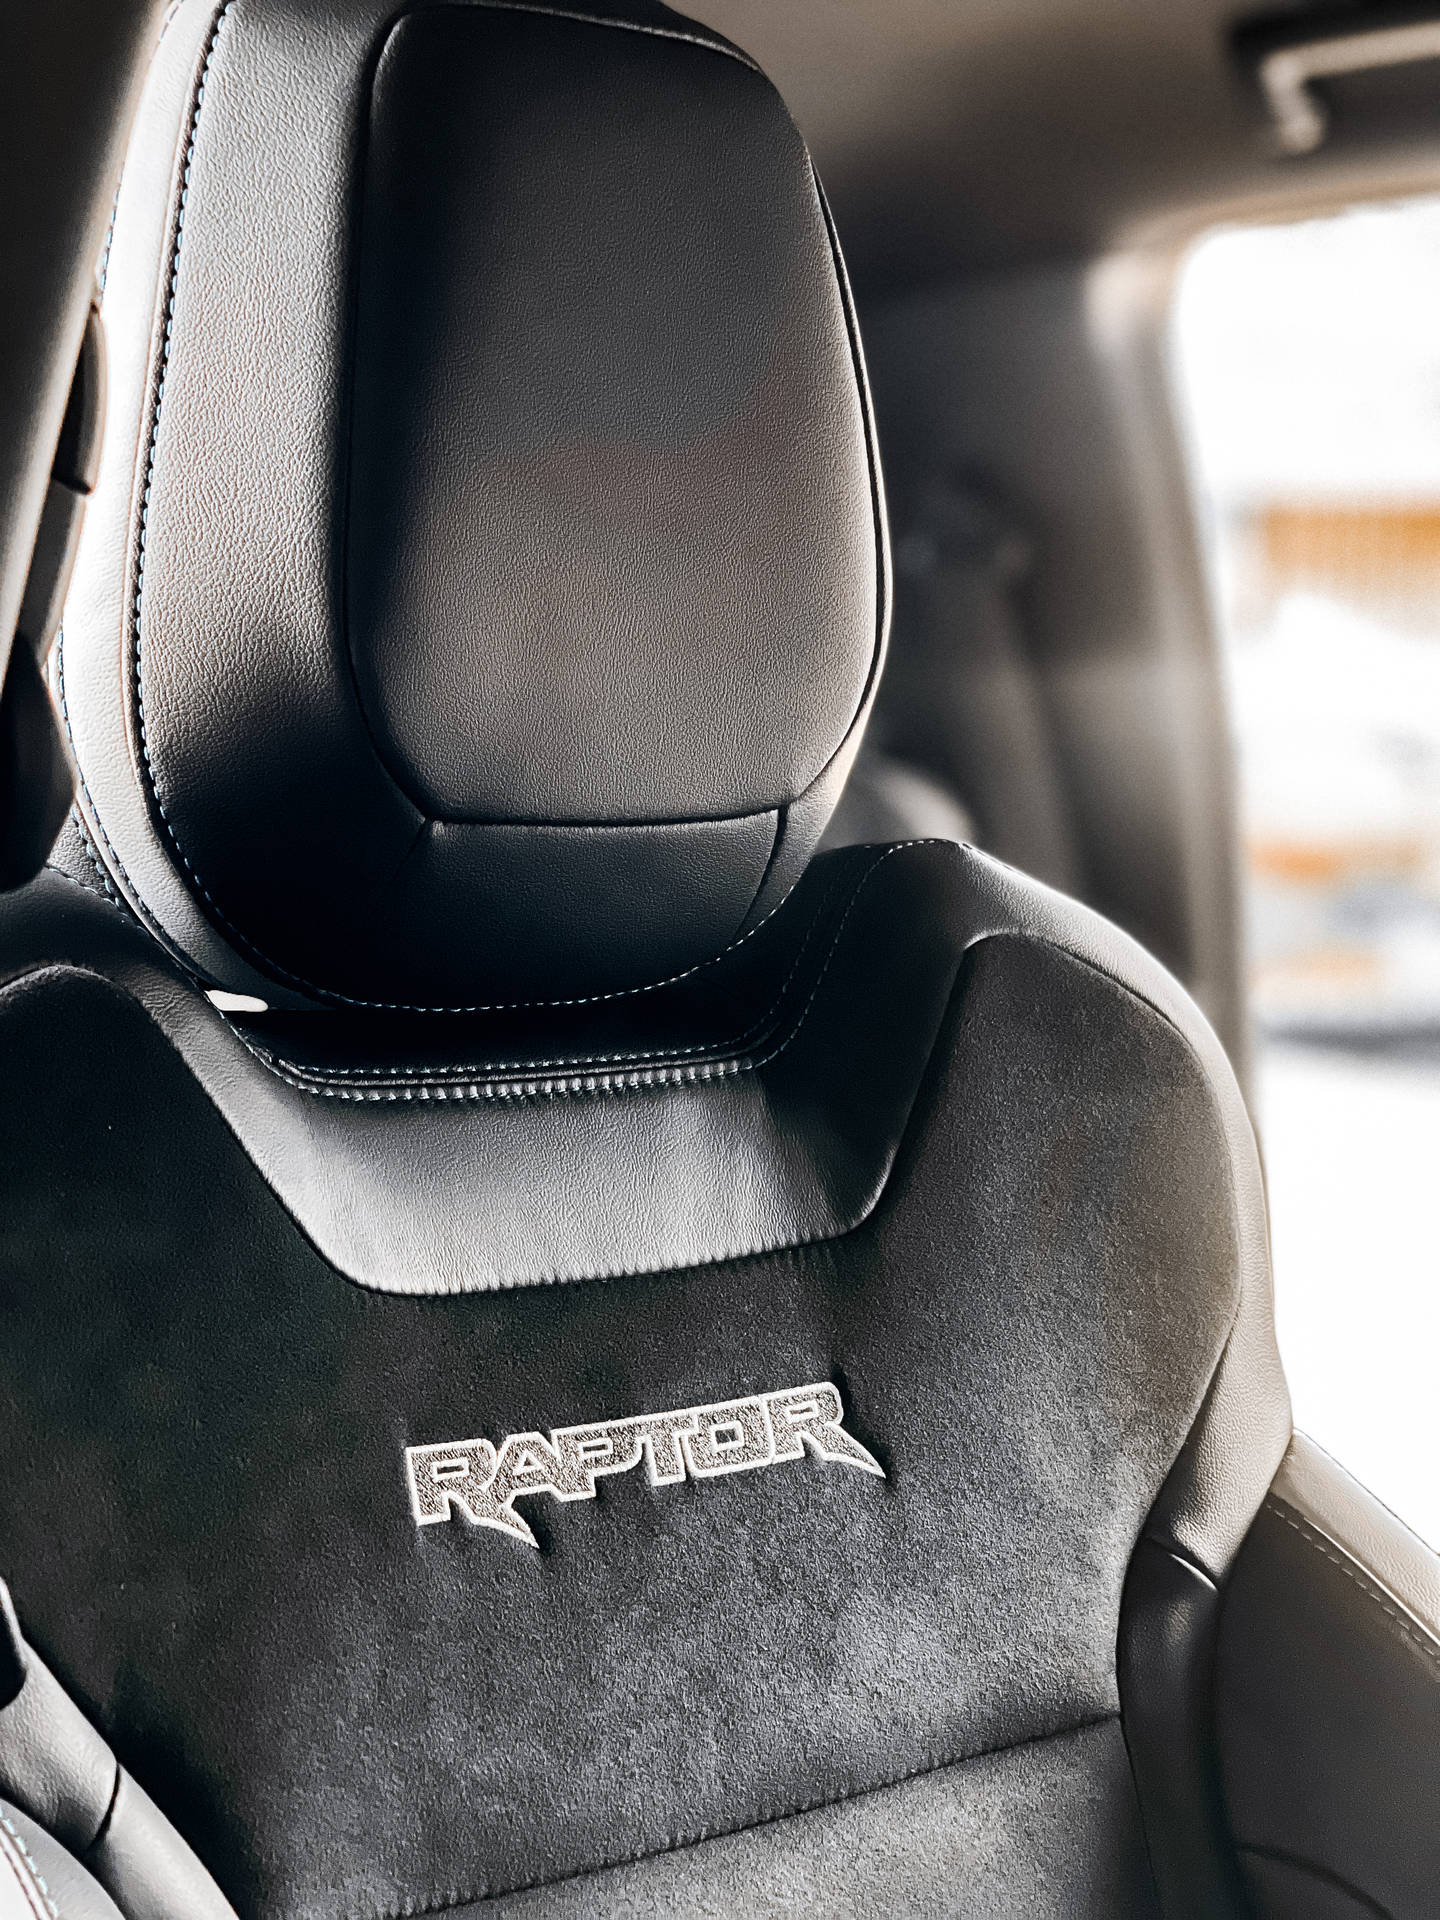 Ford Raptor Black Leather Seat